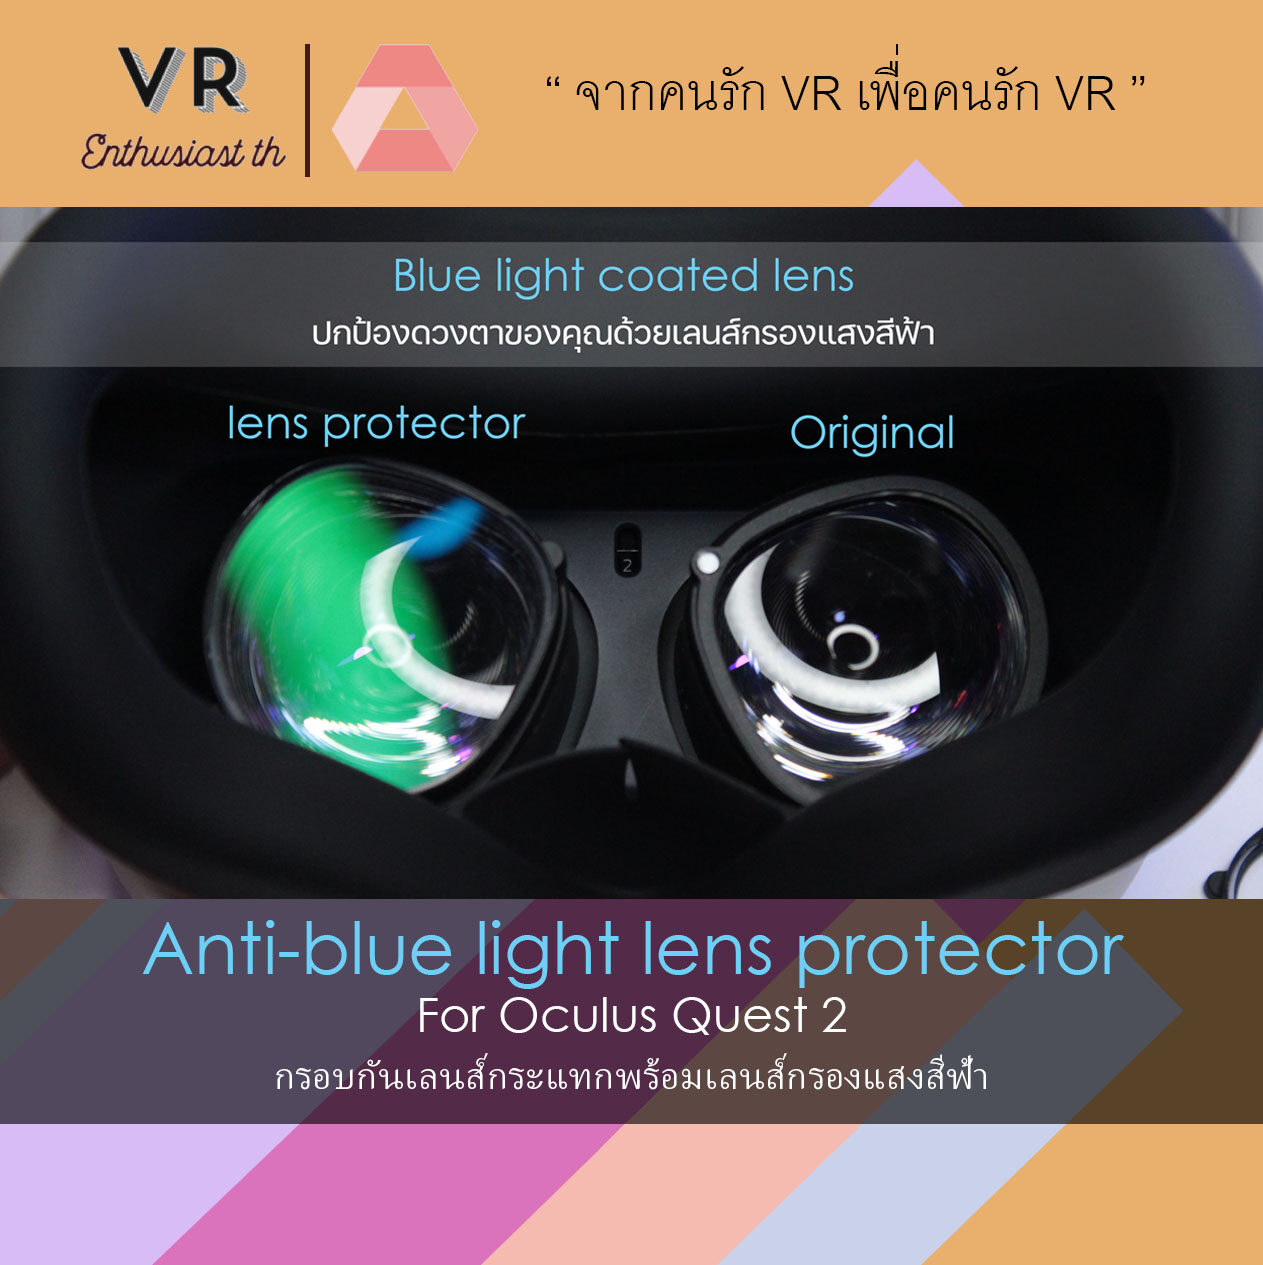 Oculus quest 2 : Anti-blue light lens protector กรอบกันลอยพร้อมเลนส์กรองแสงสีฟ้าสำหรับ Oculus quest 2